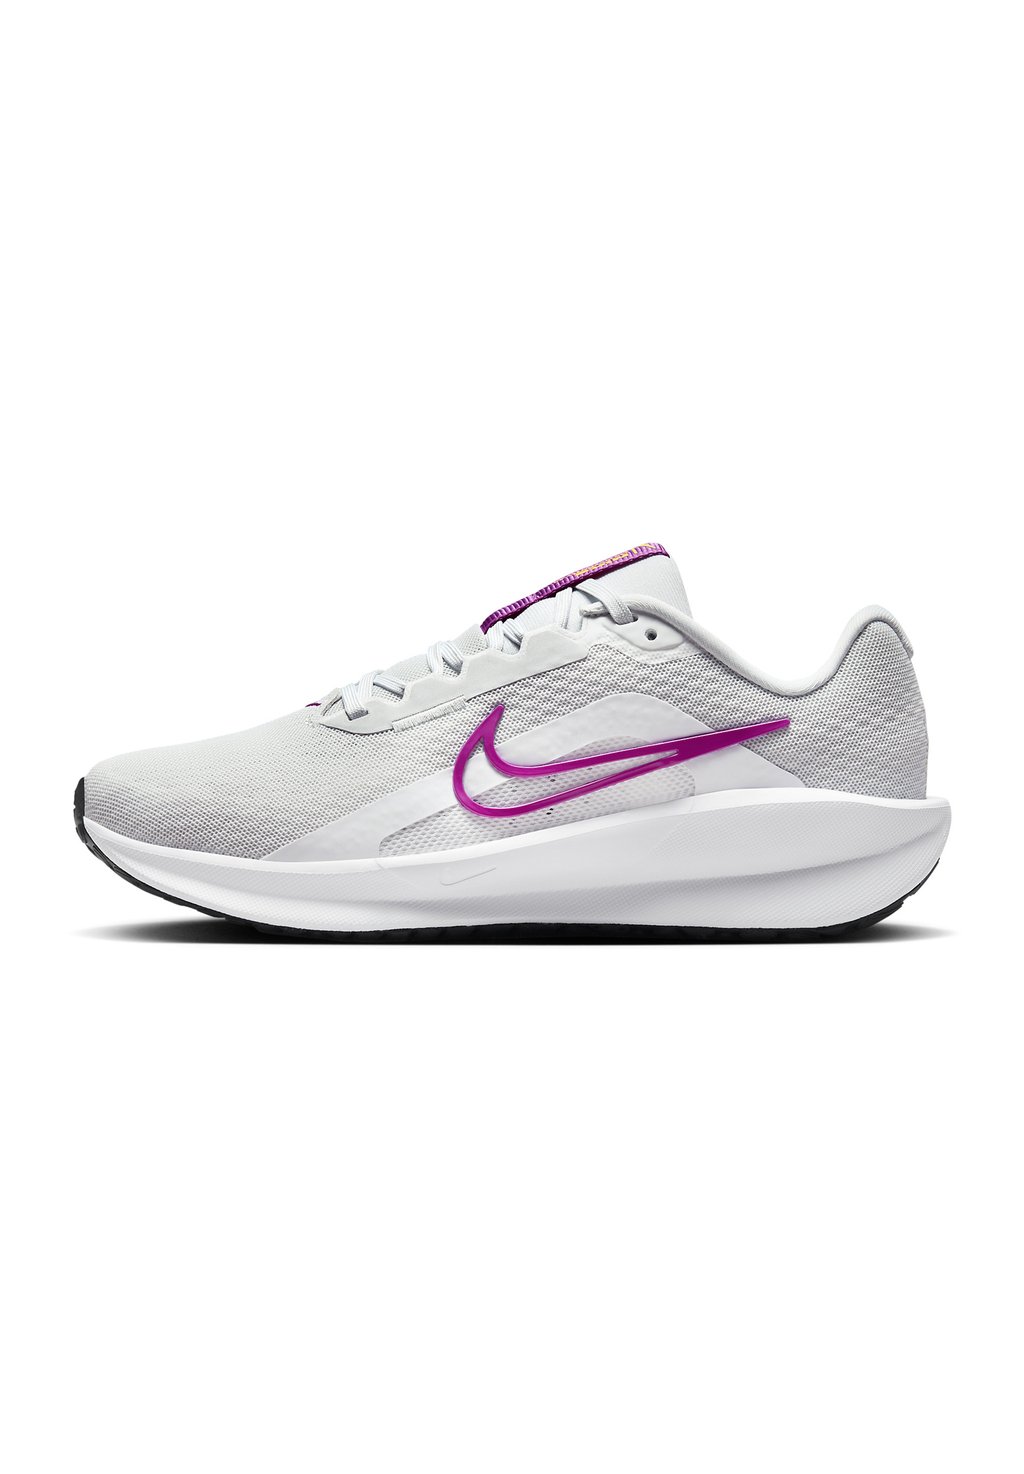 Нейтральные кроссовки DOWNSHIFTER 13 Nike, цвет photon dust/black laser orange hyper violet white